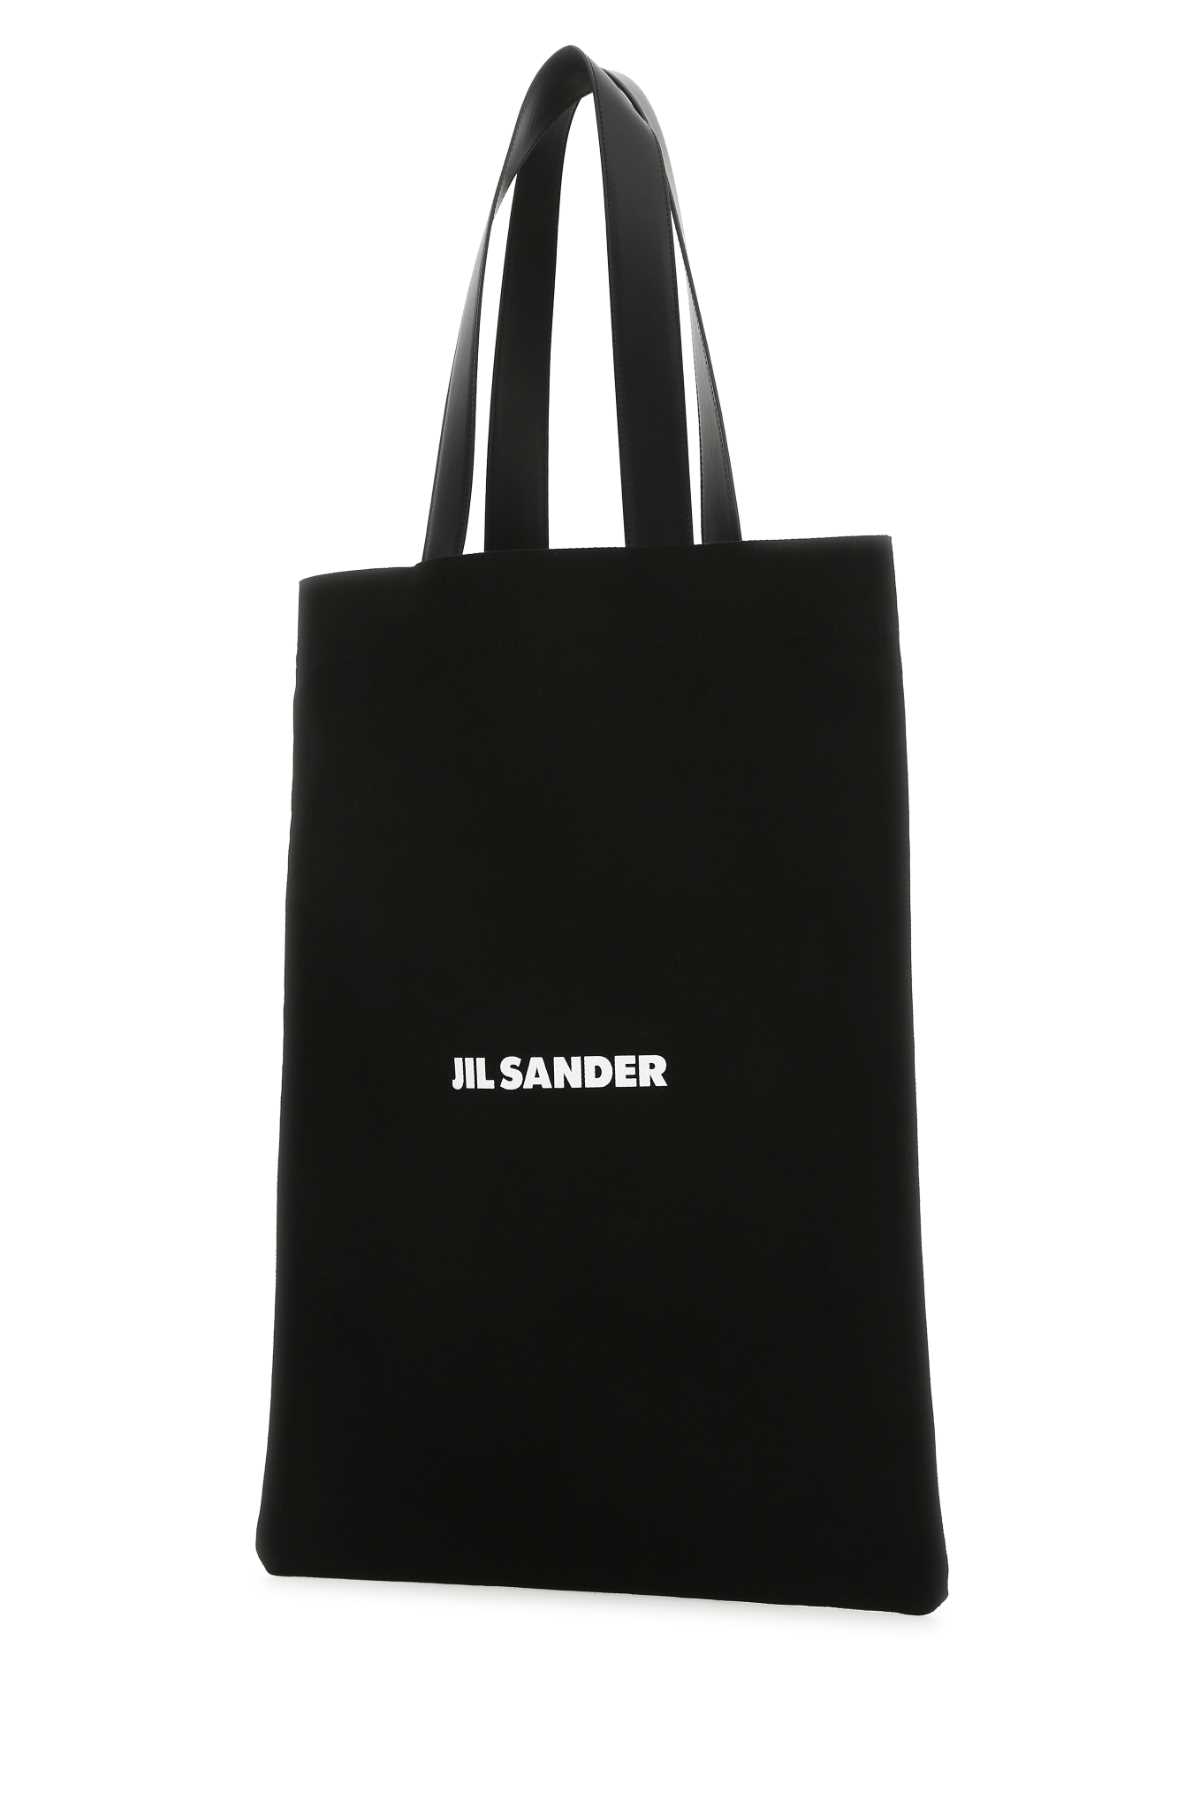 Jil Sander Black Canvas Shopping Bag In 001